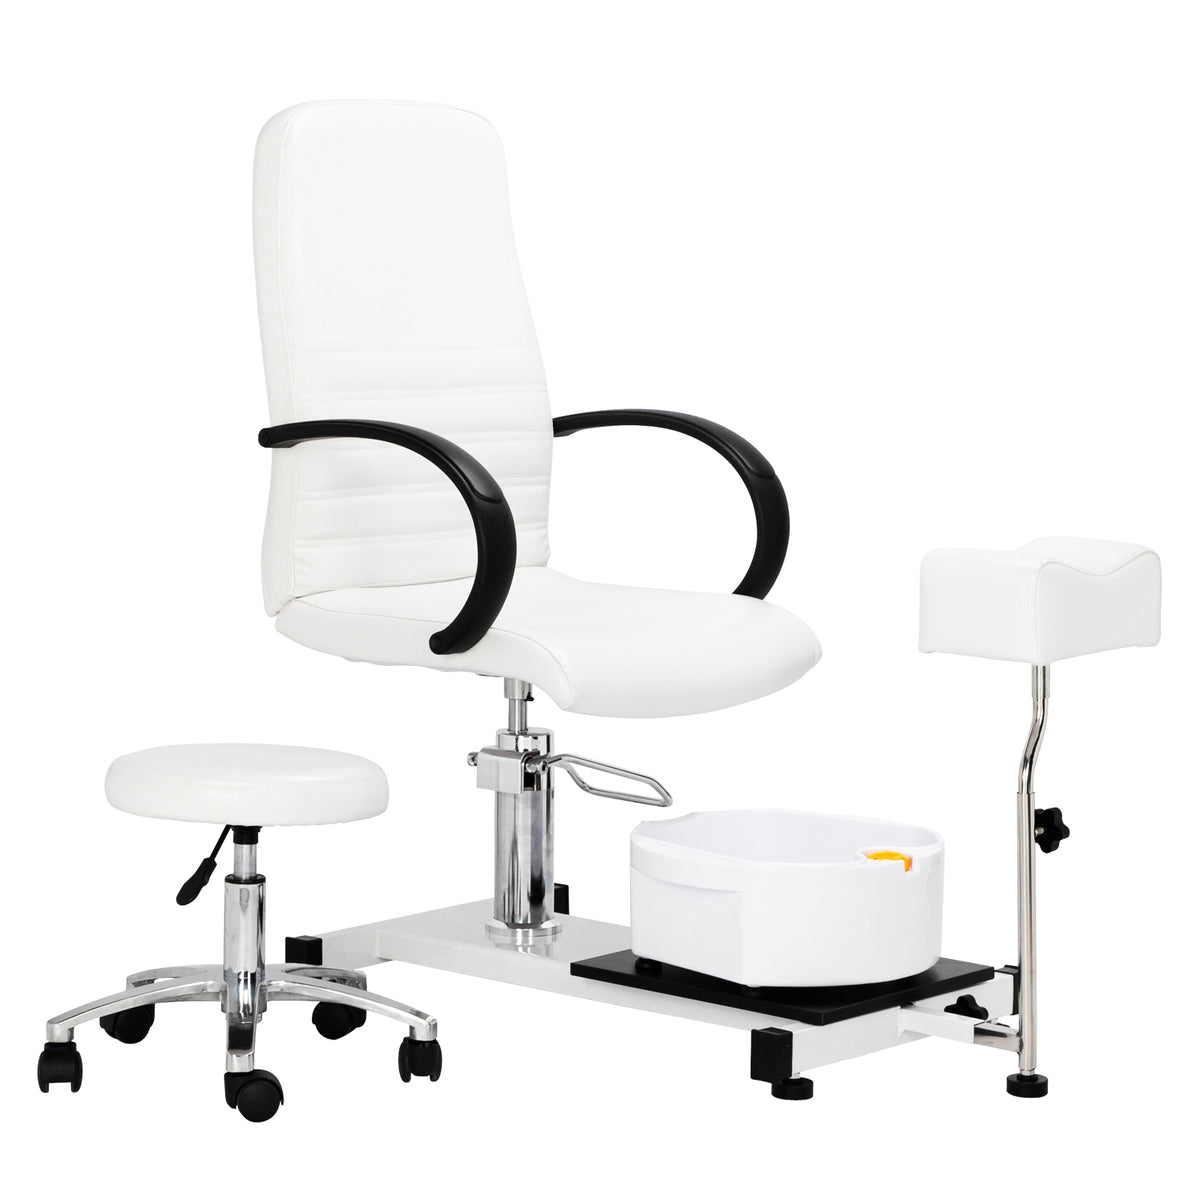 OmySalon Pedicure Chair with Stool & Bubble Massage Foot Bath